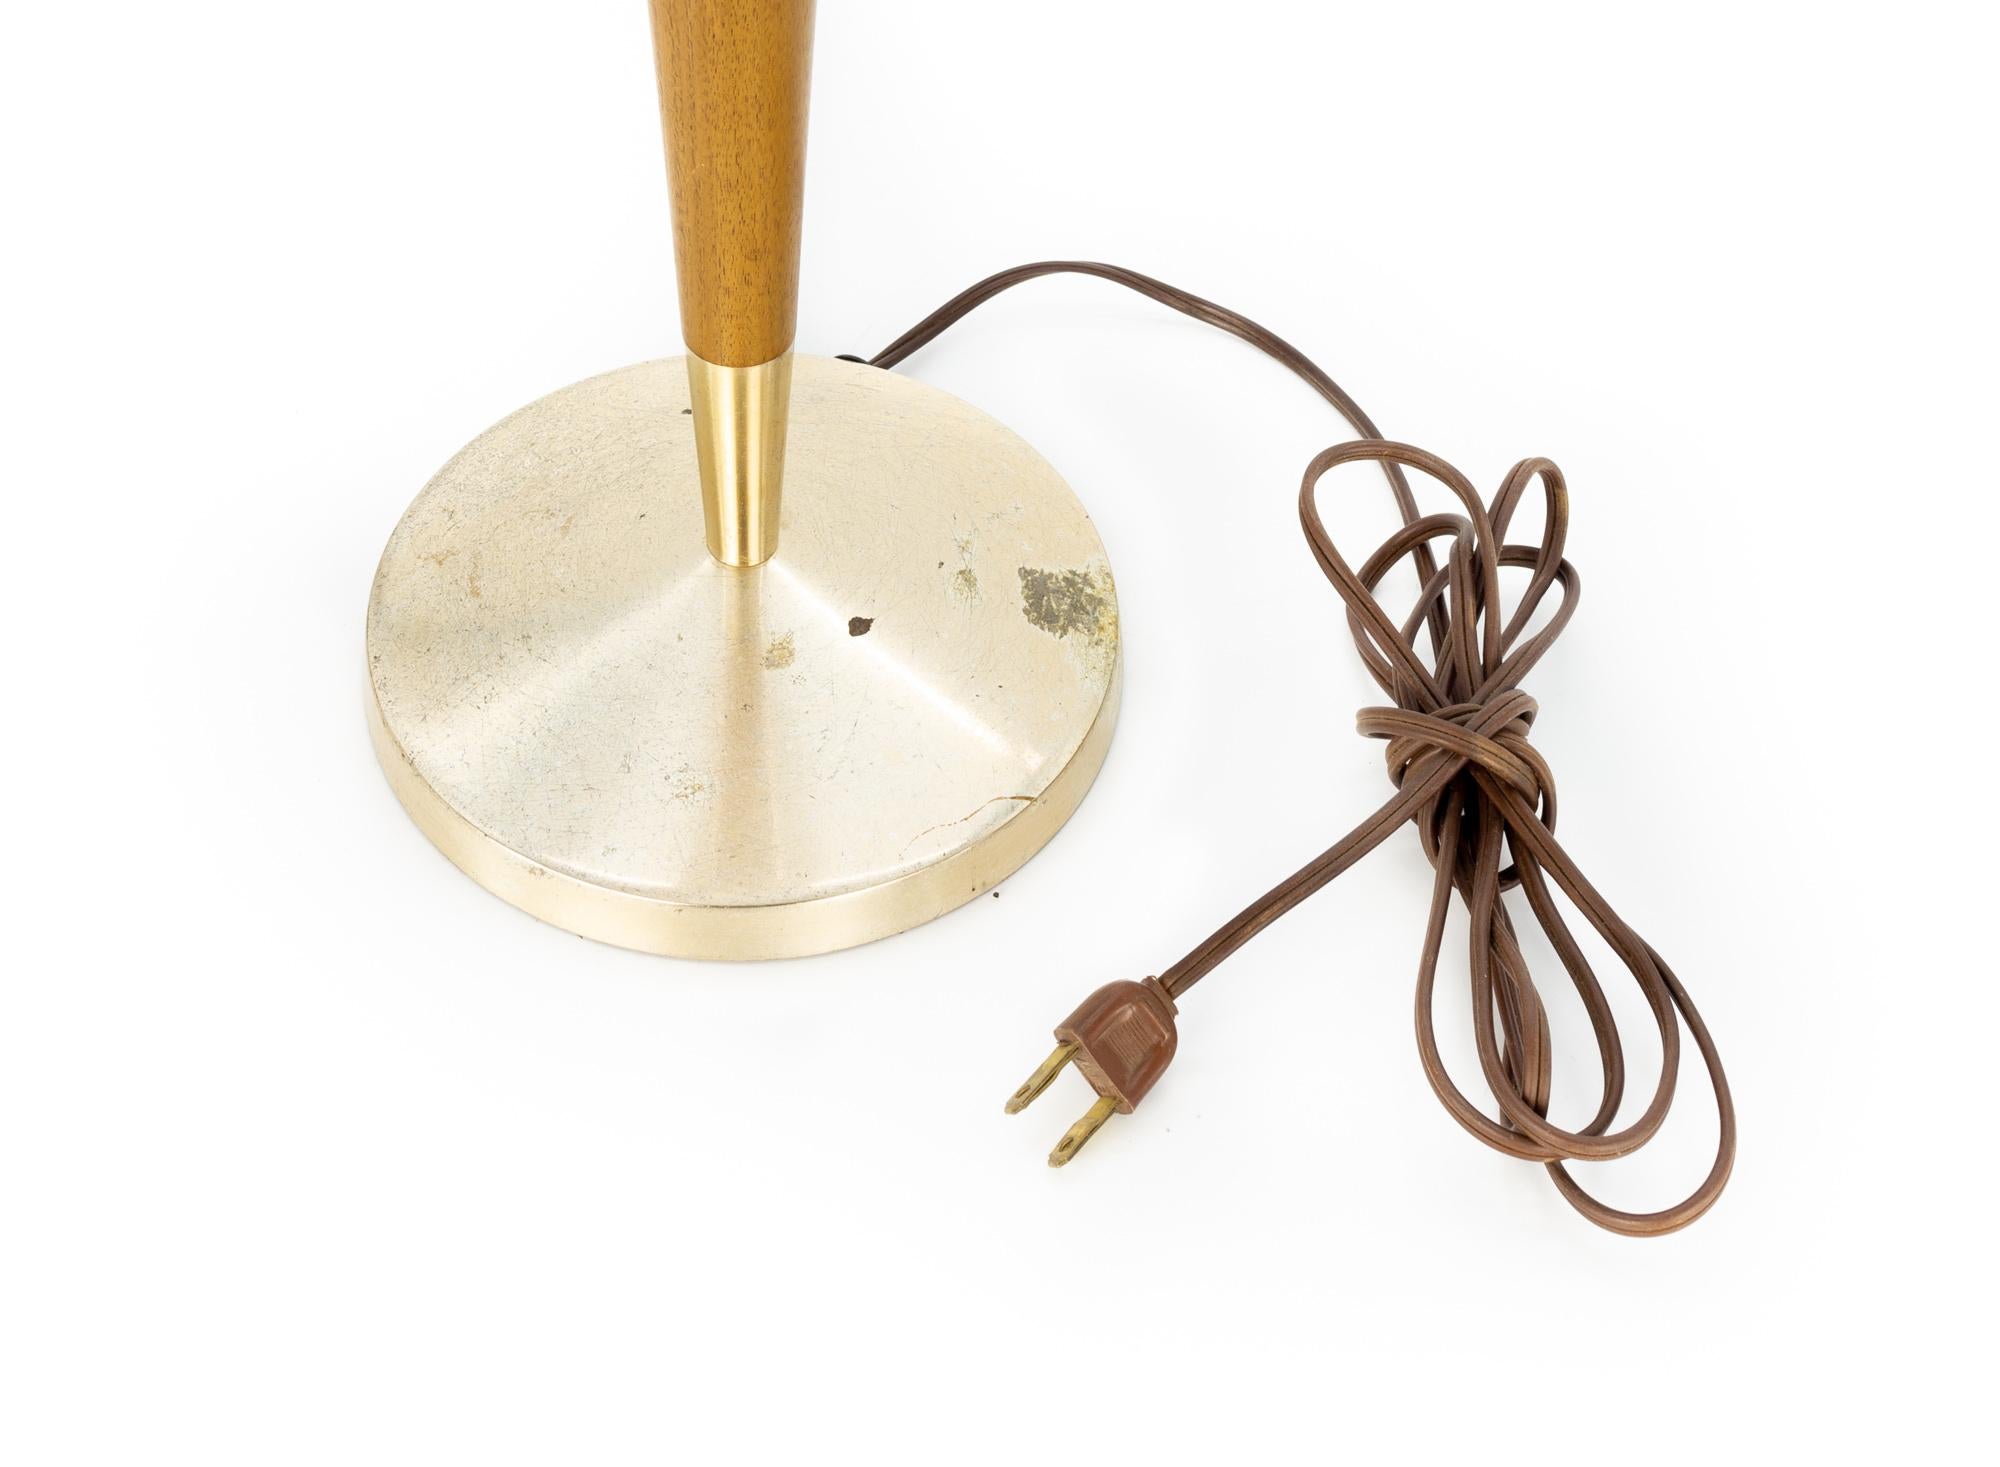 Metal Gerald Thurston for Stiffel Mid Century Teak Table Lamp For Sale